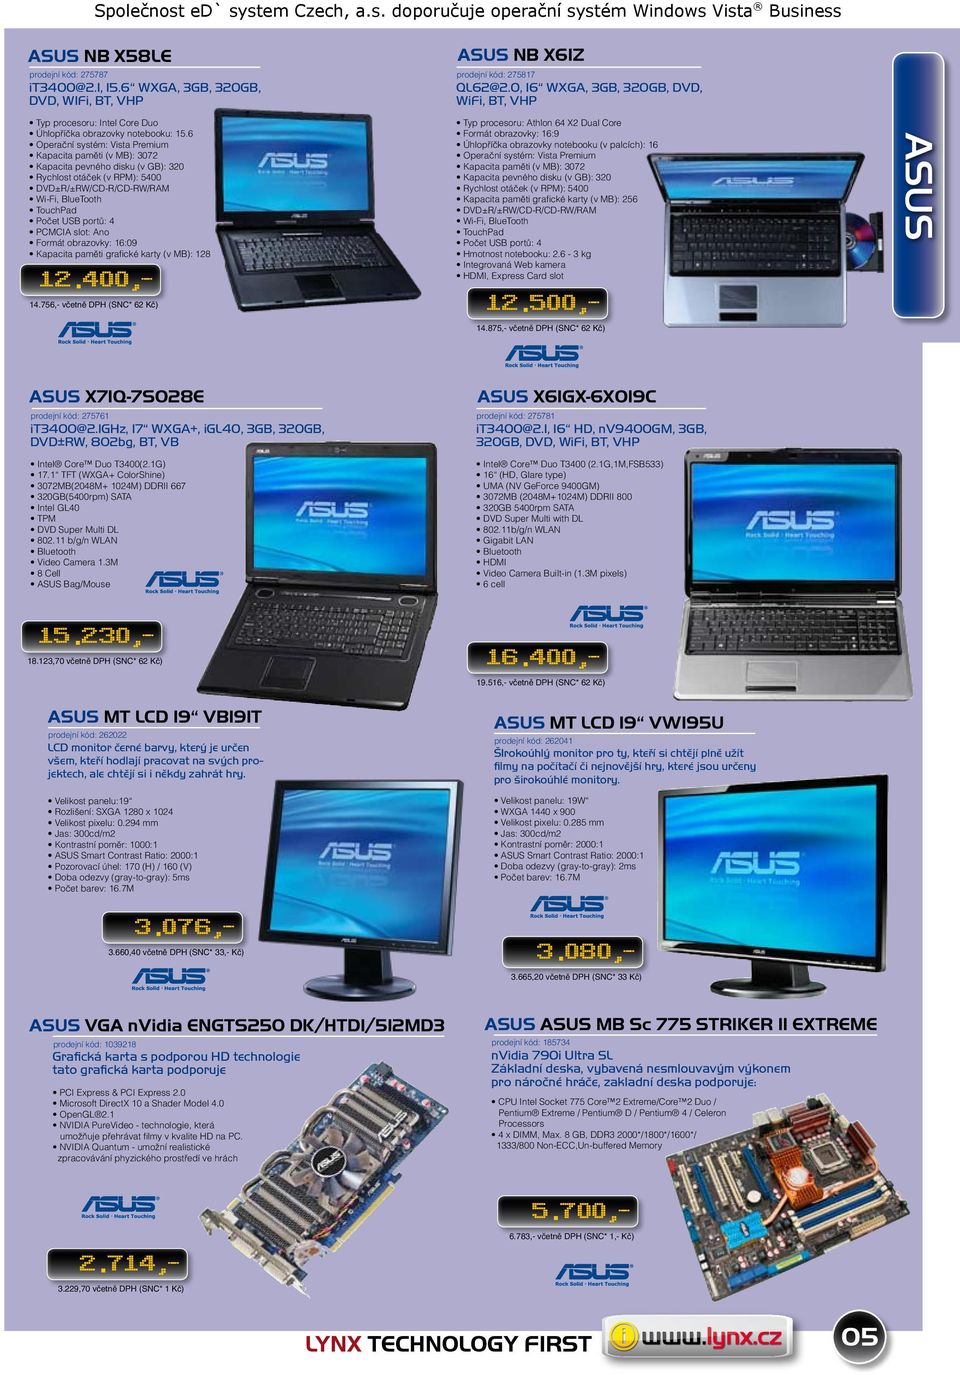 6 Operační systém: Vista Premium Kapacita paměti (v MB): 3072 Kapacita pevného disku (v GB): 320 Rychlost otáček (v RPM): 5400 DVD±R/±RW/CD-R/CD-RW/RAM Wi-Fi, BlueTooth TouchPad Počet USB portů: 4